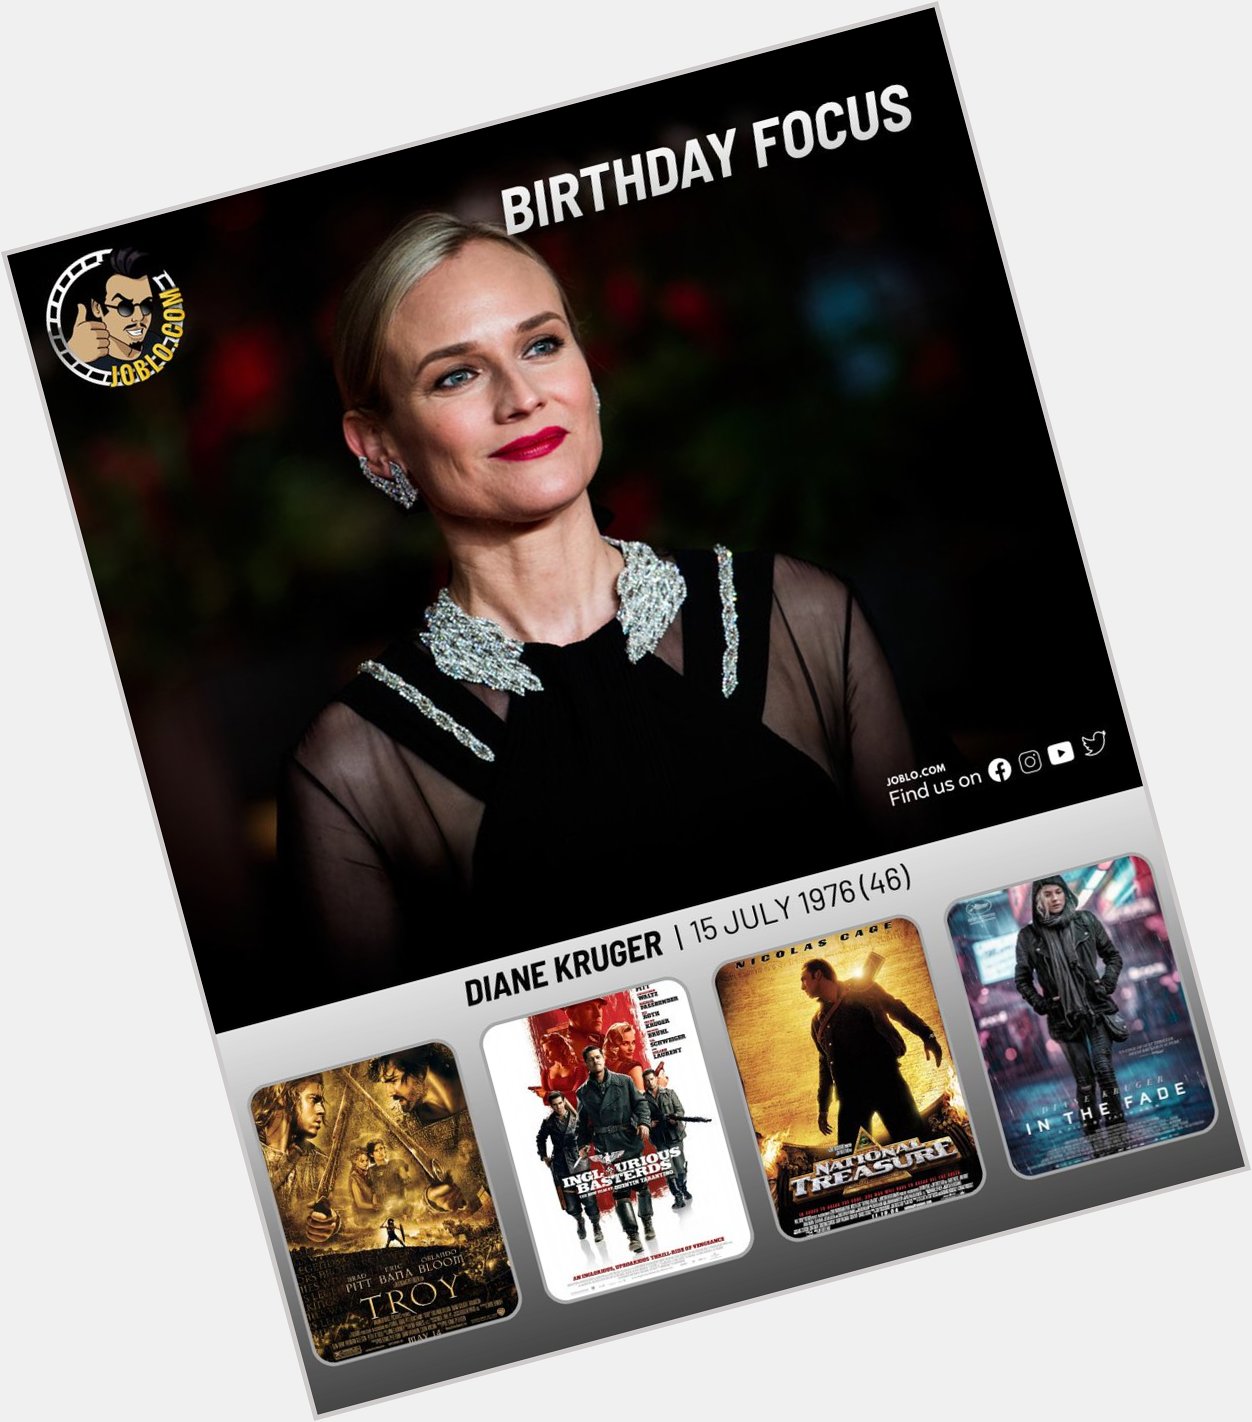 Happy birthday Diane Kruger!   